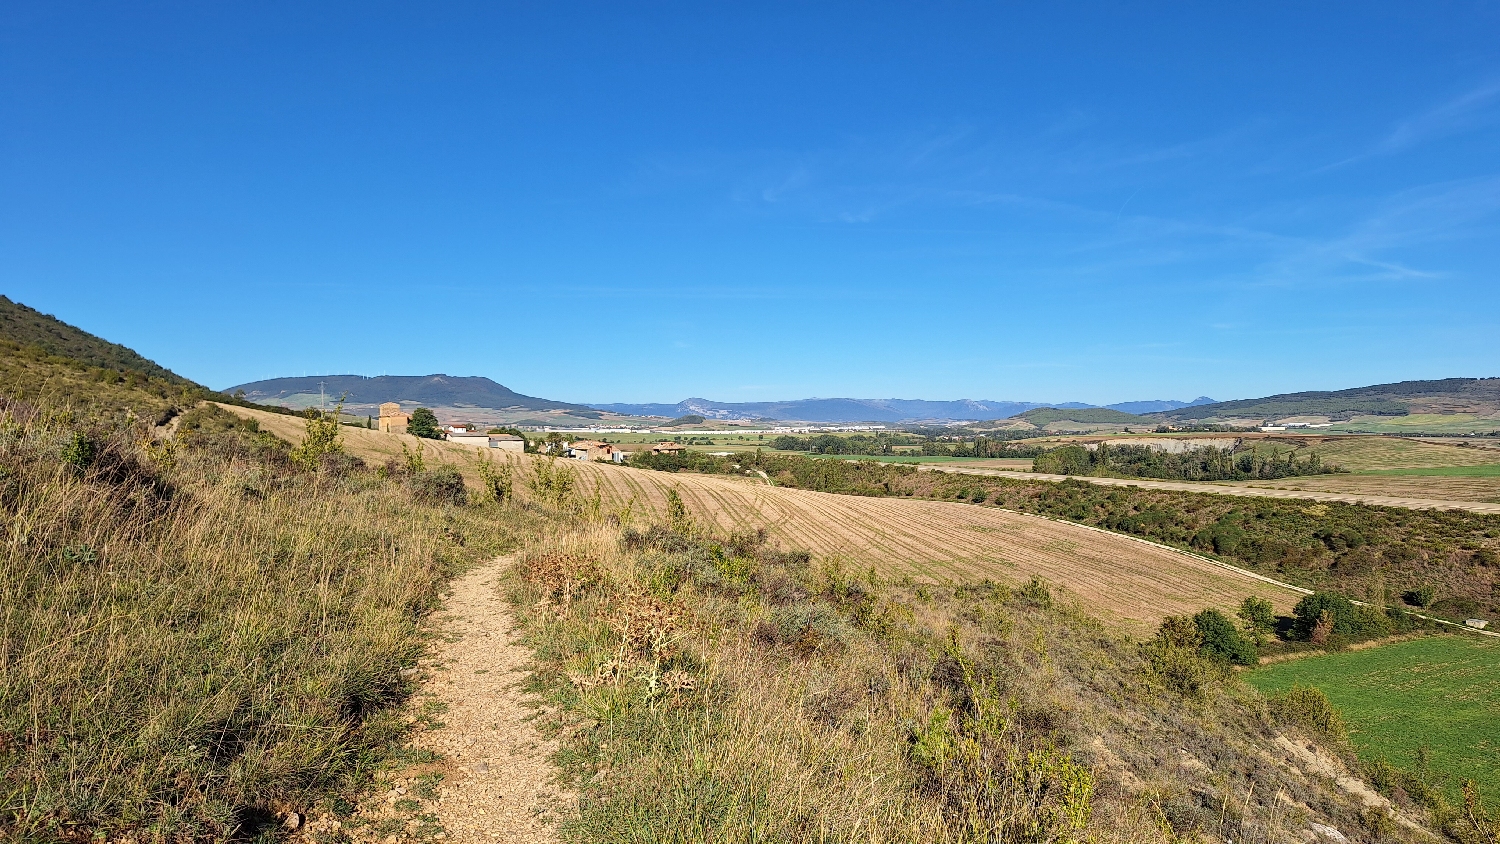 El Camino, Aragon út, szűk gyalogút